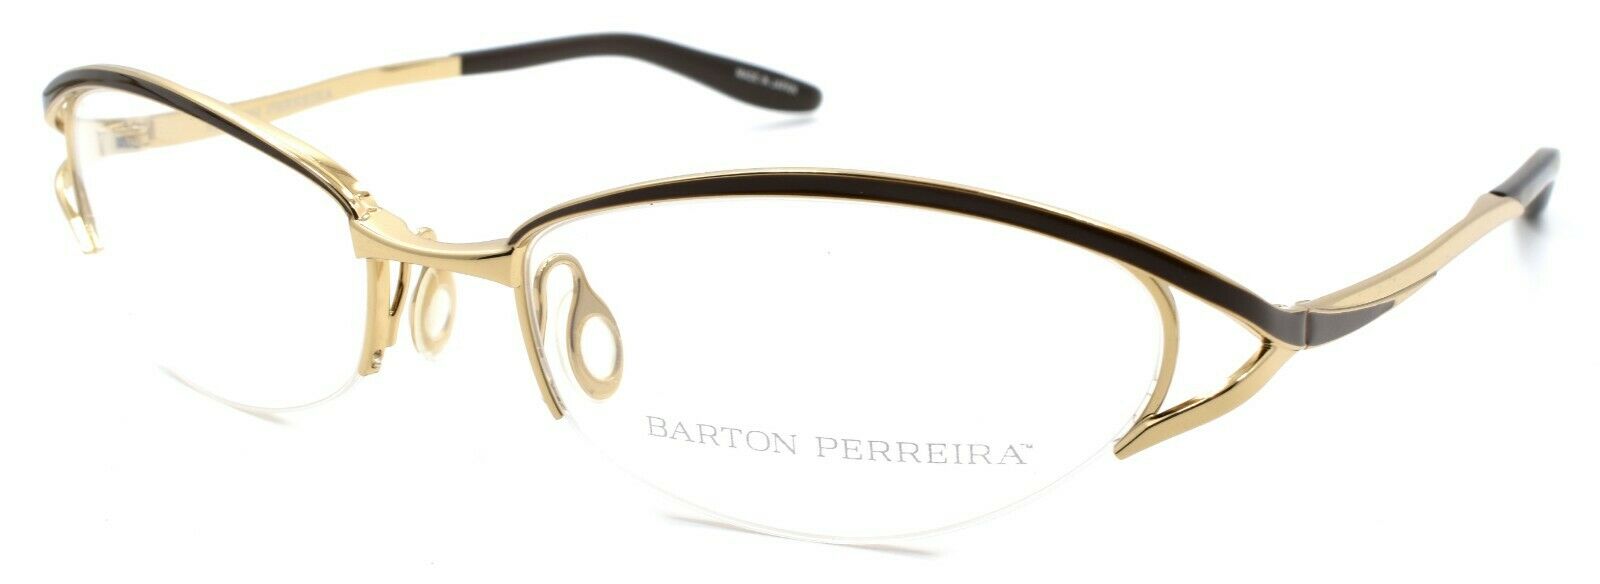 1-Barton Perreira Eliza Women's Glasses Frames 53-17-125 Foxy Brown / Gold-672263038207-IKSpecs